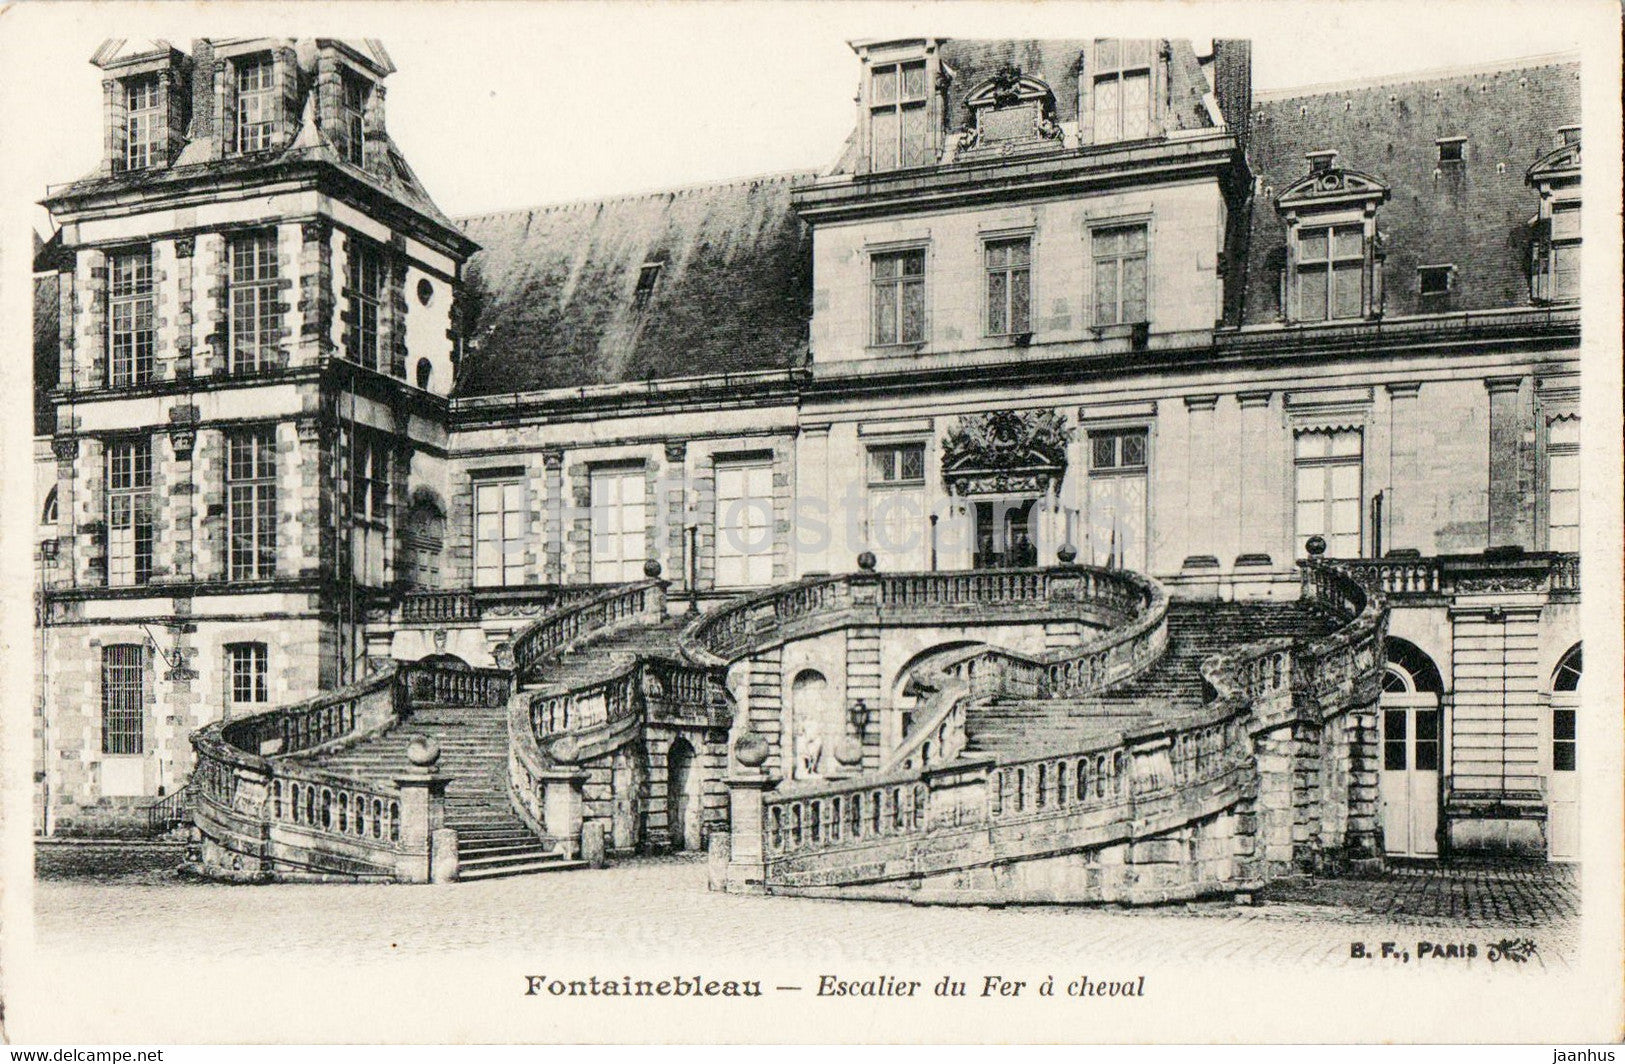 Fontainebleau - Escalier du Fer a cheval - old postcard - 1908 - France - unused - JH Postcards